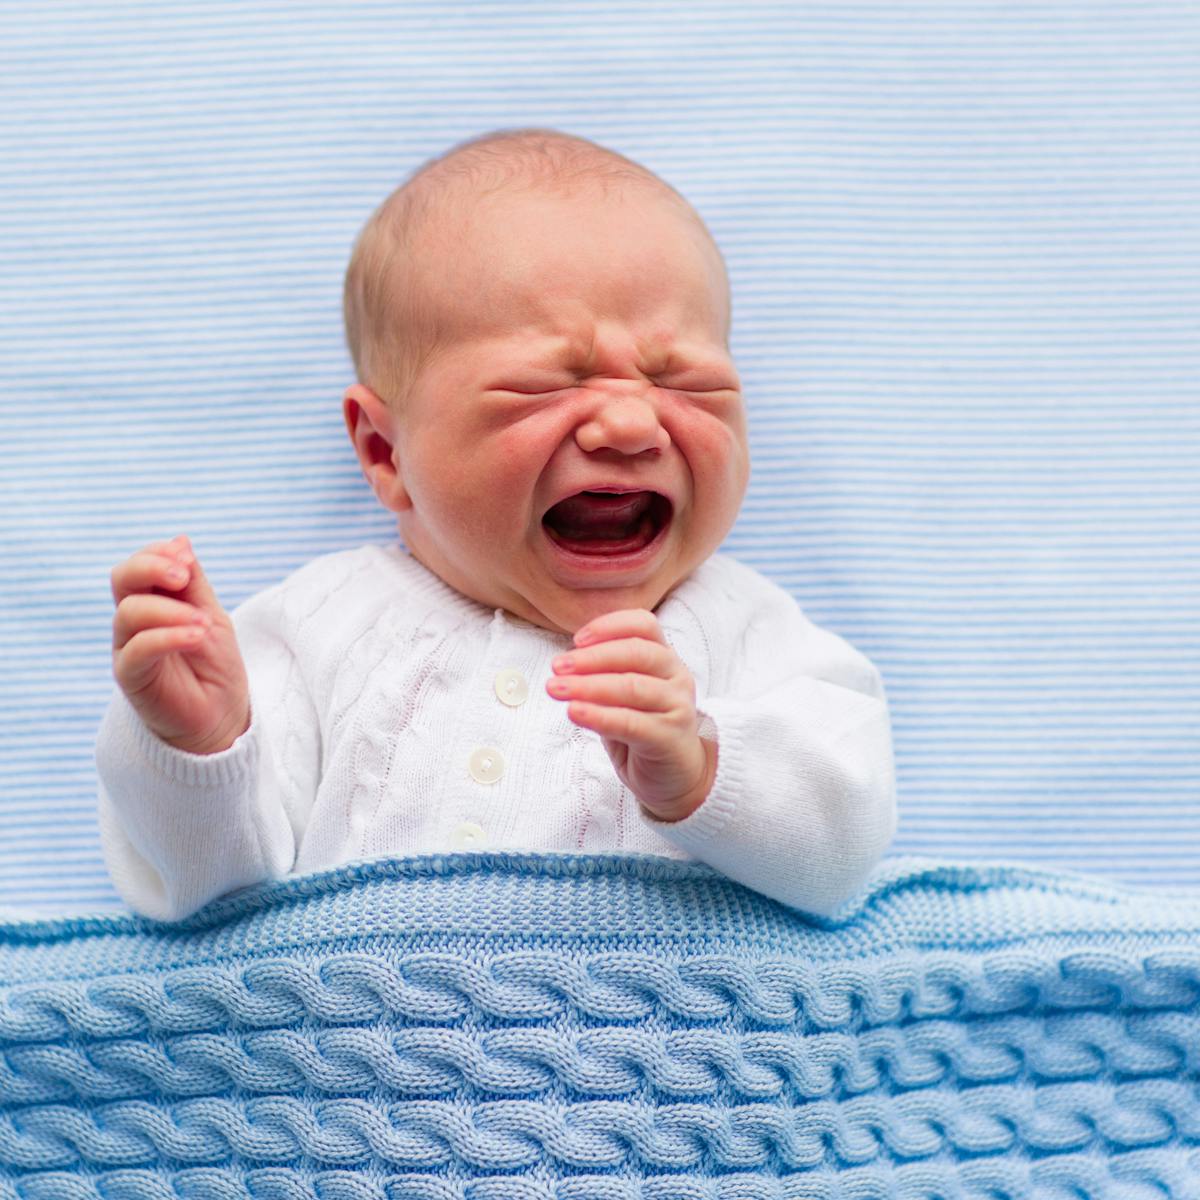 baby crying loud when breastfeeding